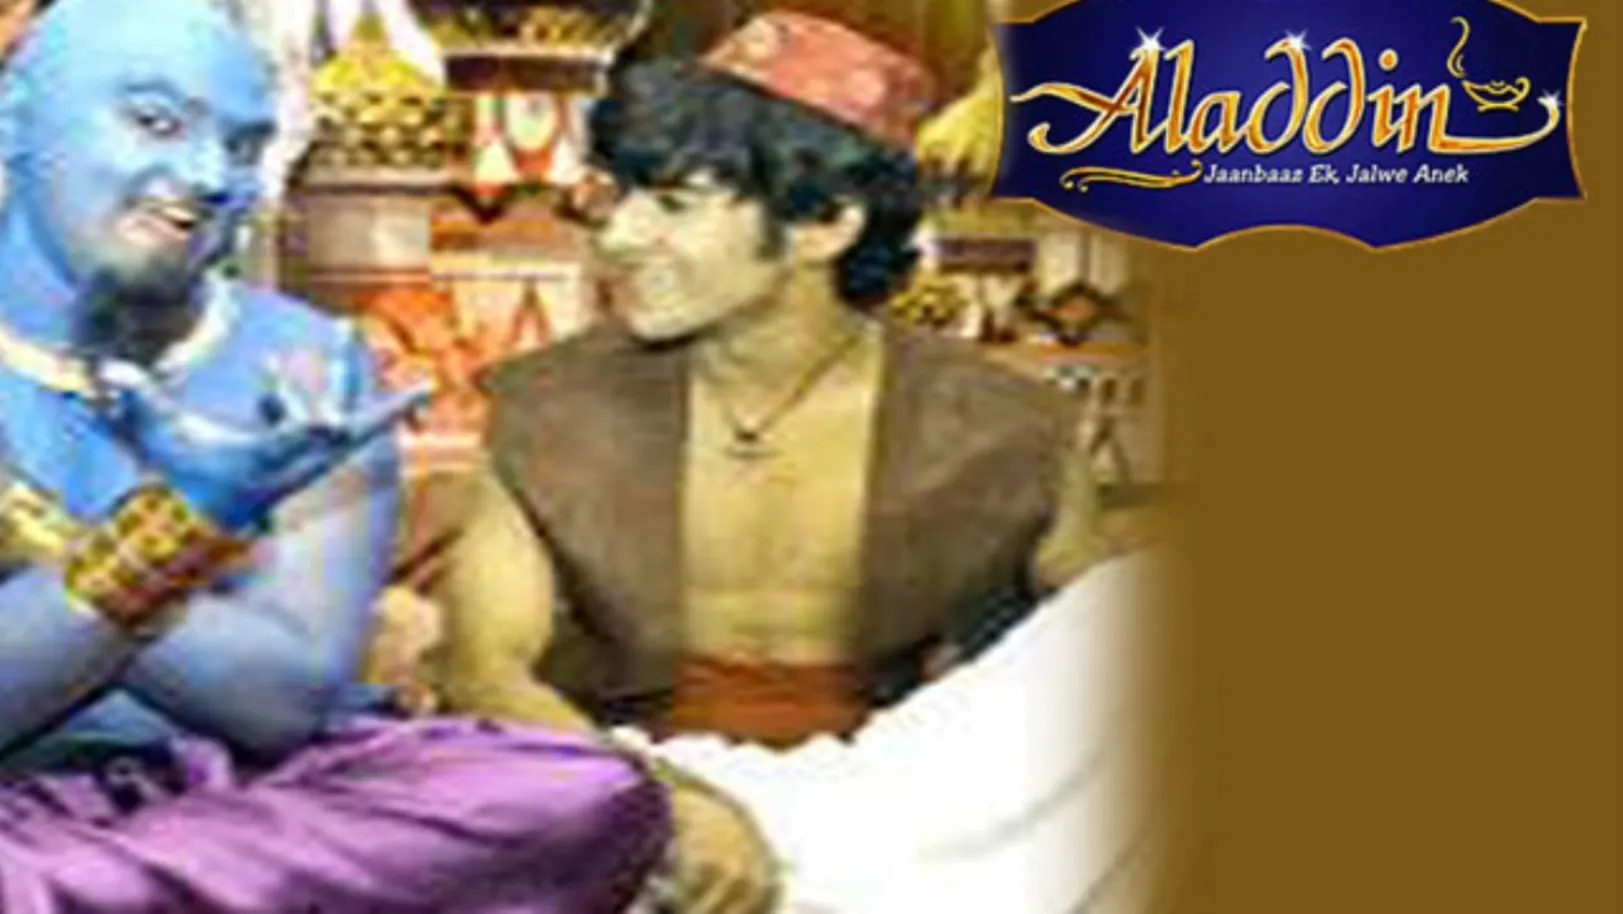 Aladdin Jaanbaaz Ek, Jalwe Anek | Binge Watch 